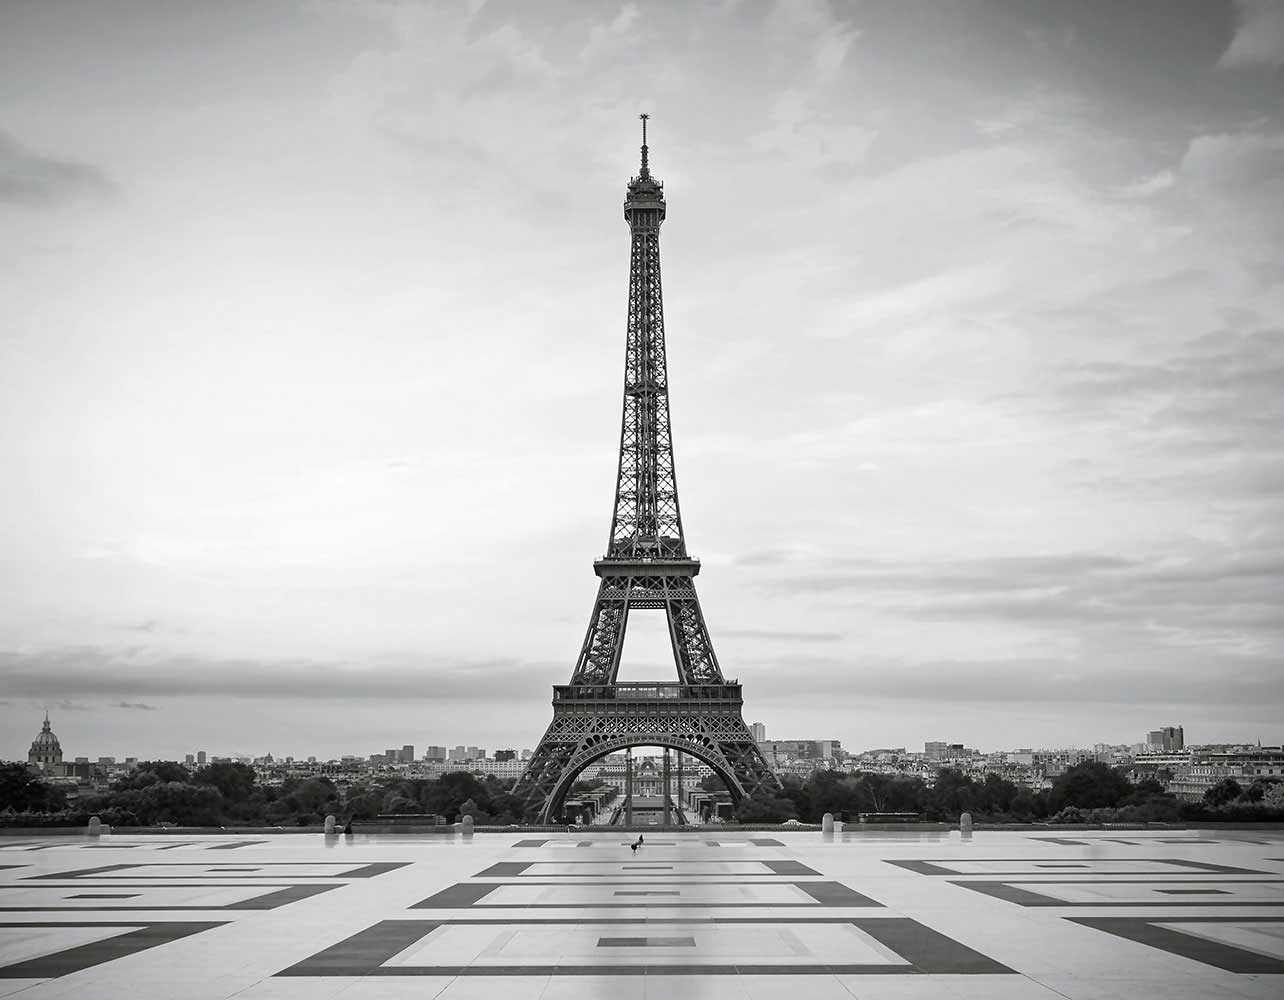 Fototapete kaufen online Eiffel Tower Eiffelturm schwarzweiß WG